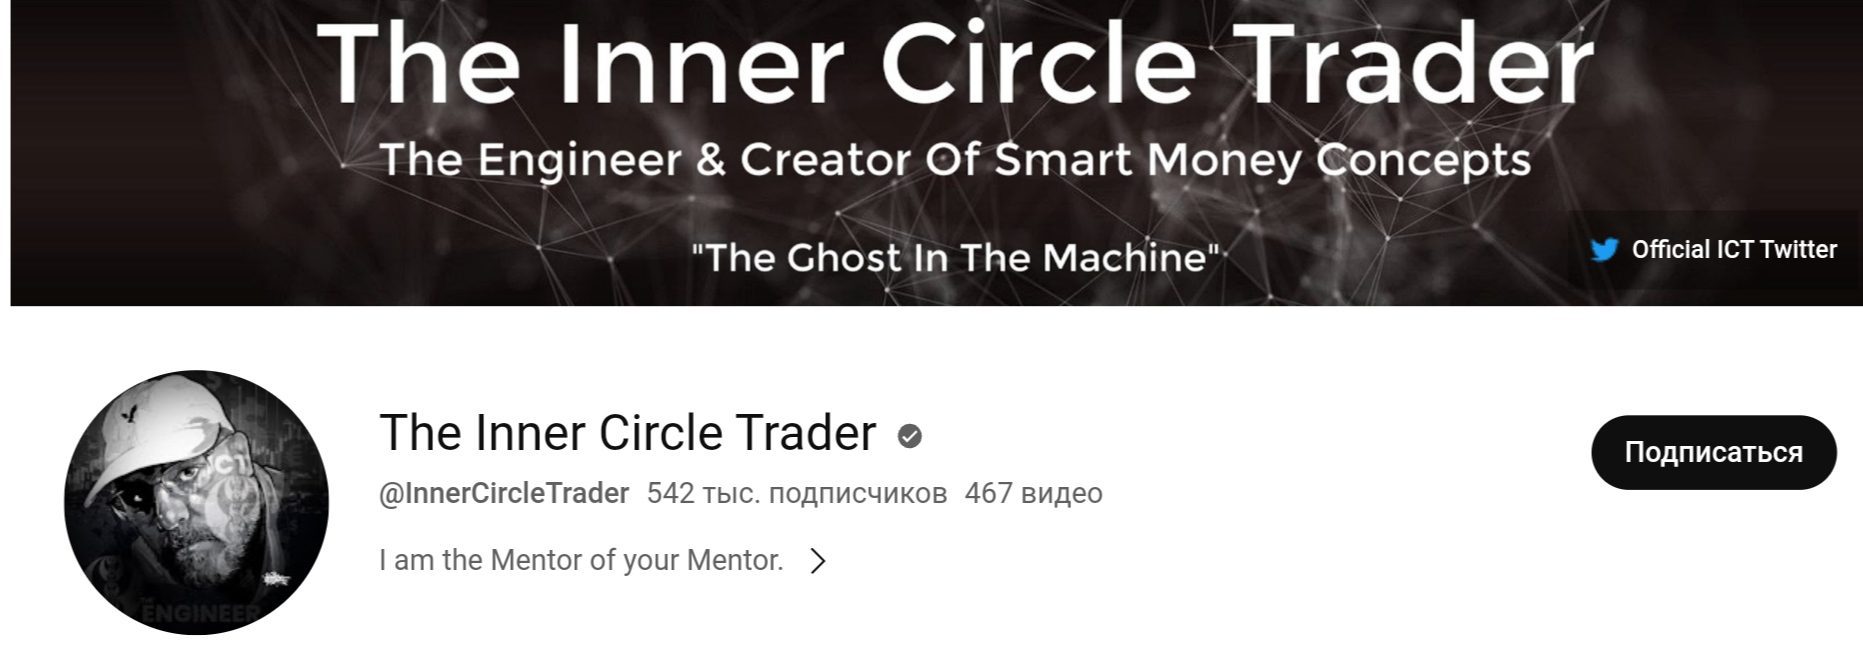 Inner Circle Trader канал